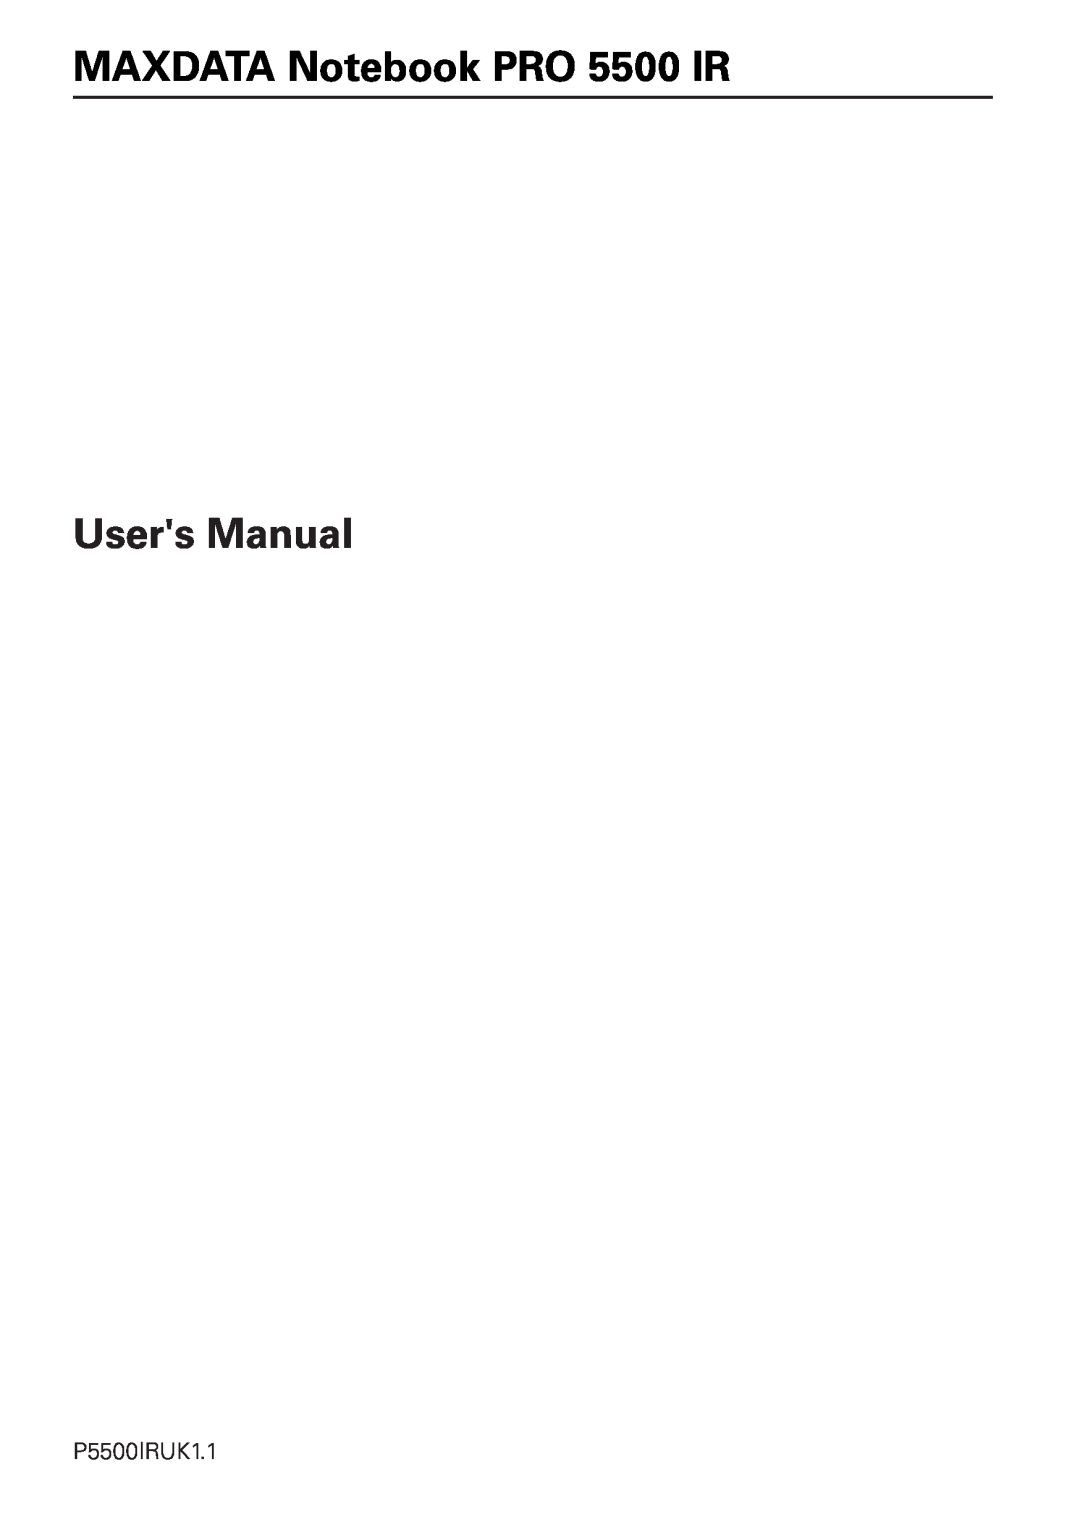 MAXDATA user manual MAXDATA Notebook PRO 5500 IR Users Manual, P5500IRUK1.1 